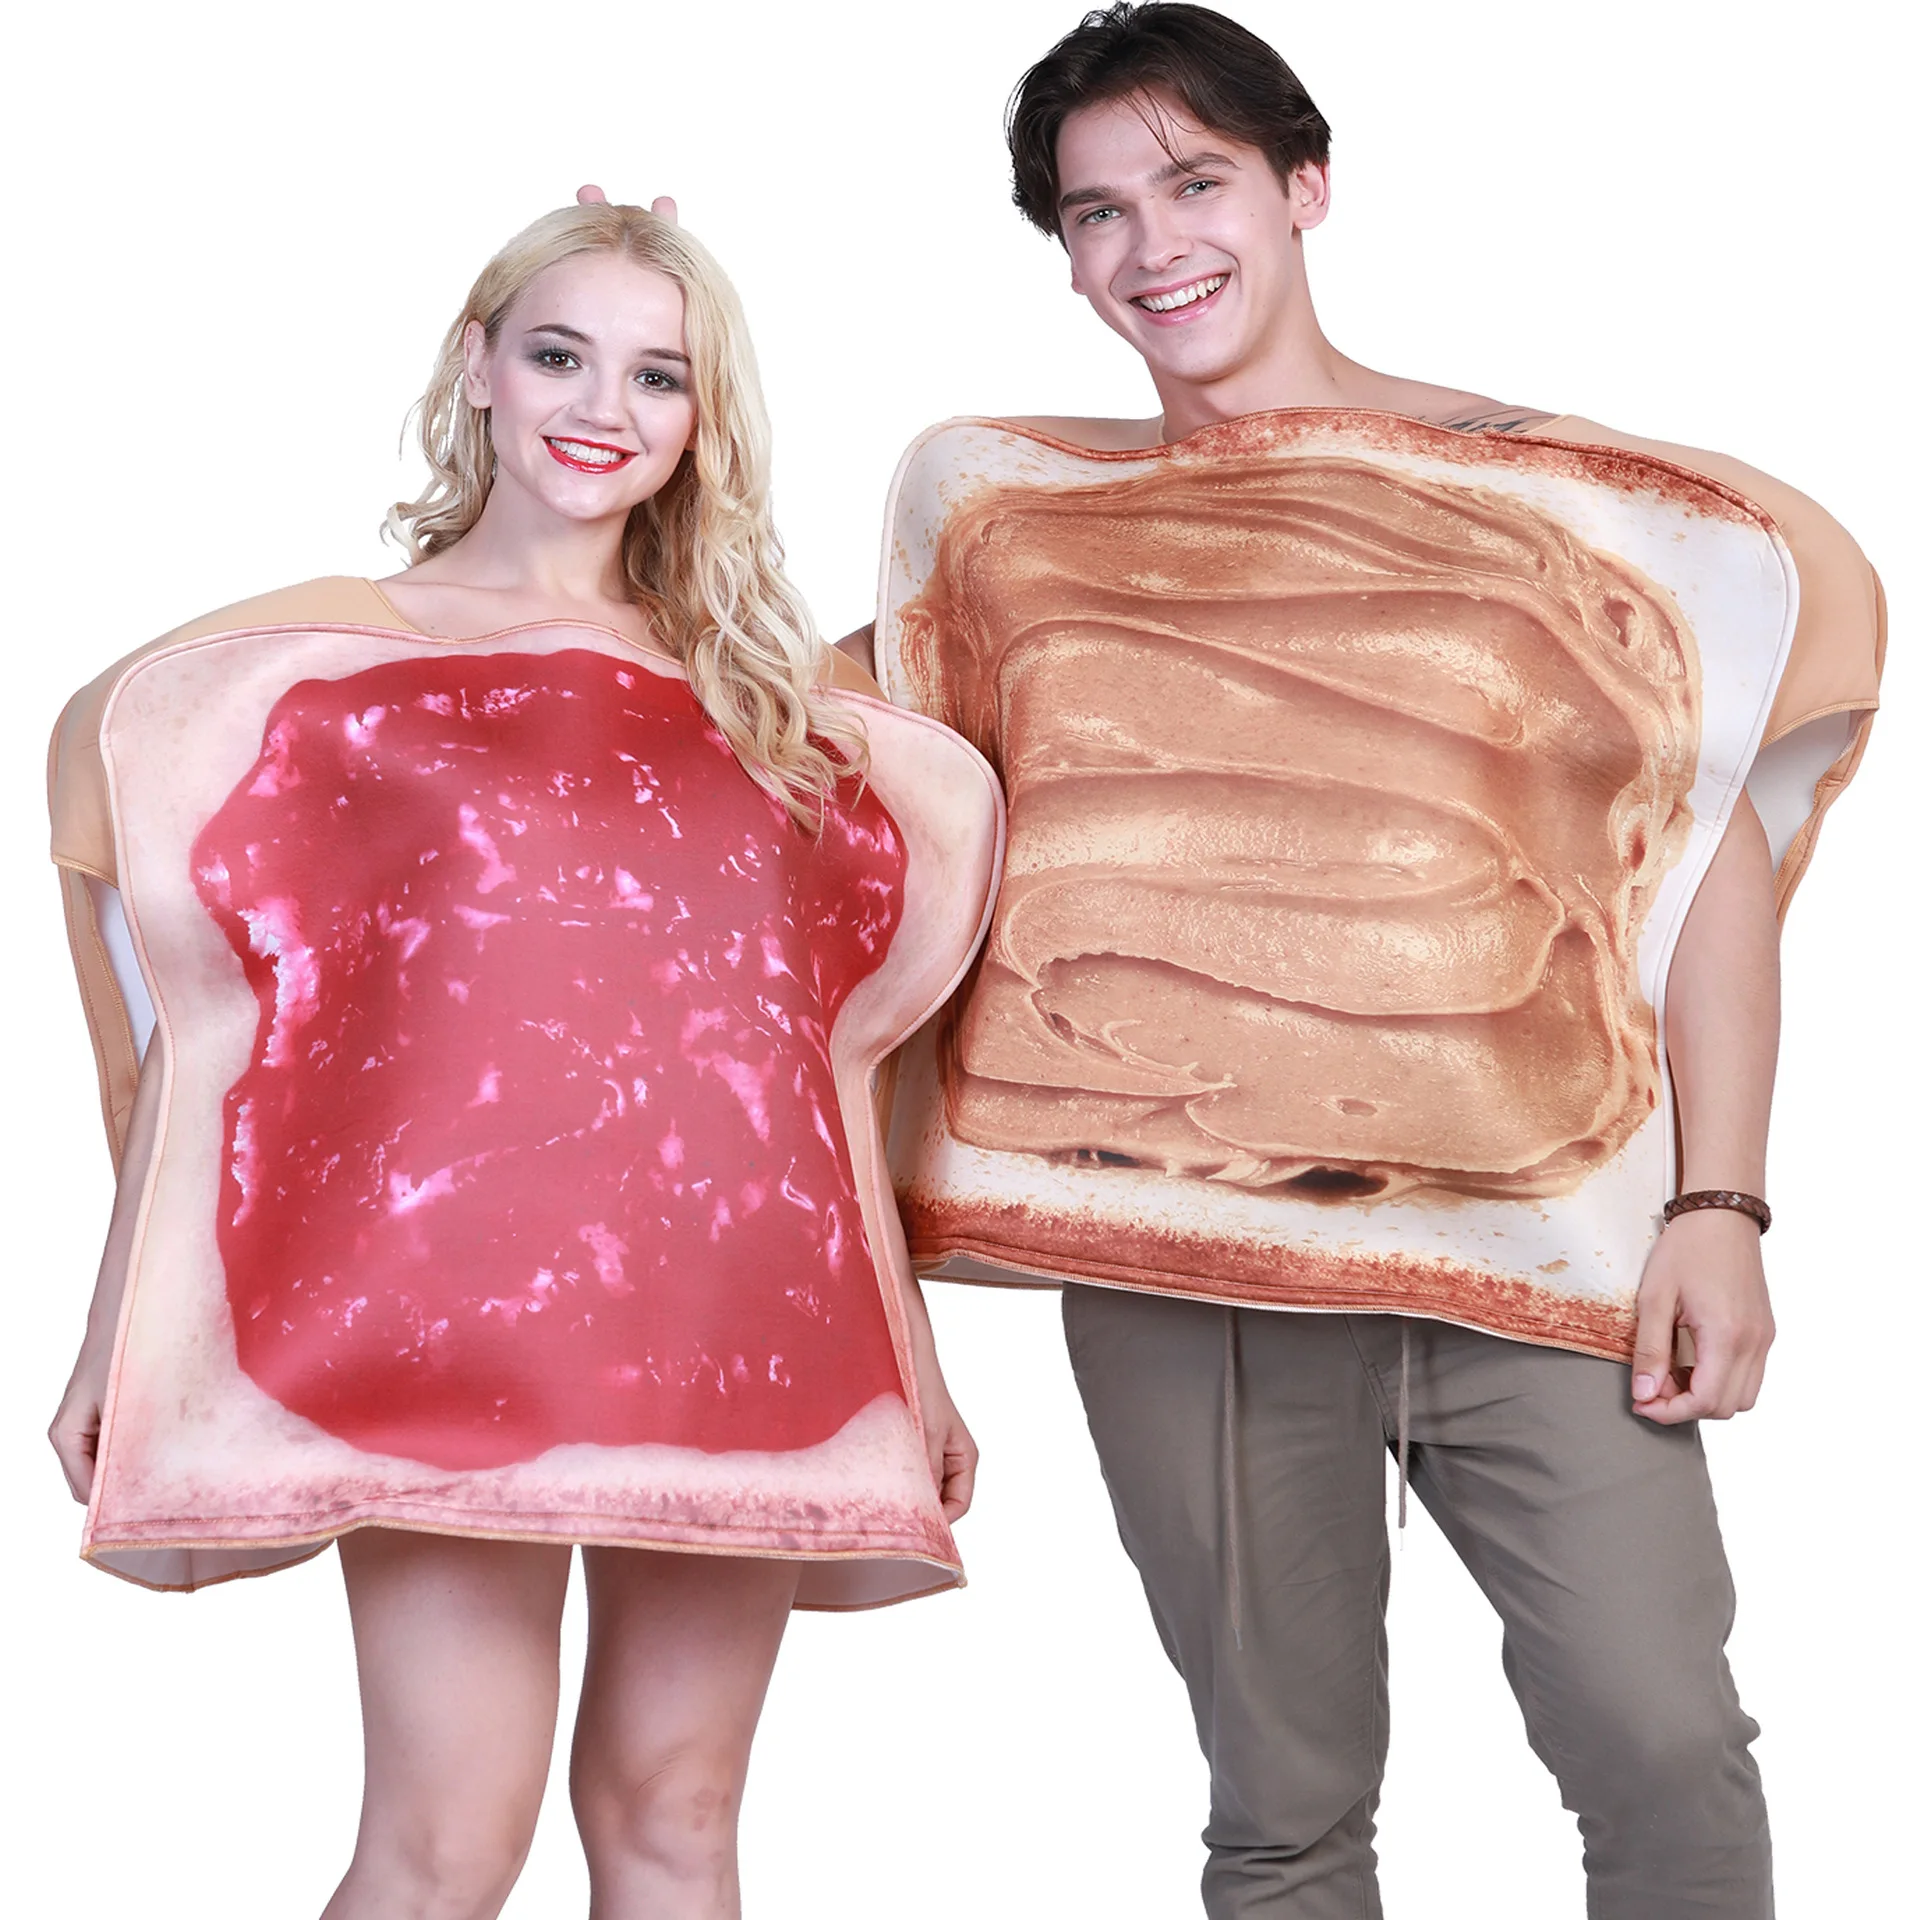 Engraçado casal geléia comida conjunto, festa de Halloween vestir traje